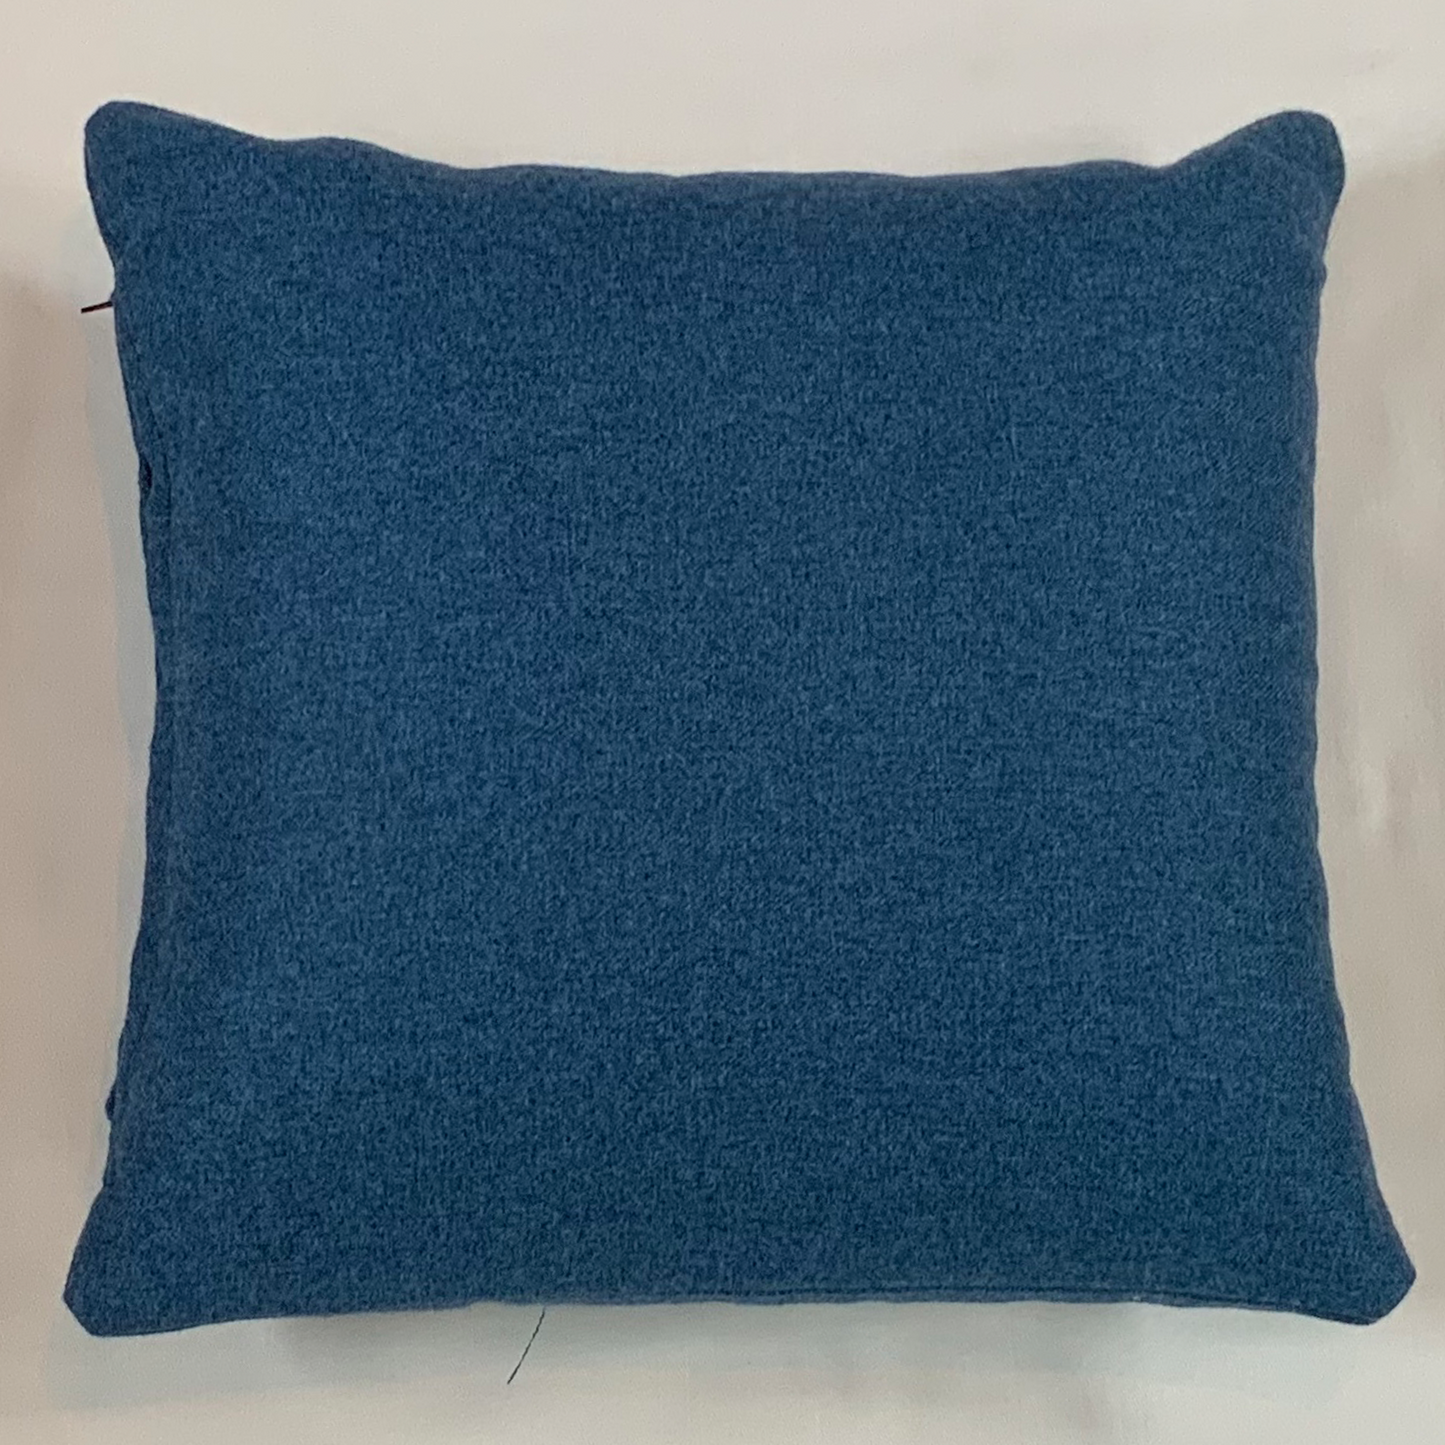 Handmade Herringbone Tweed Cushion Cover Pillow Case Home Sofa Bed Decor